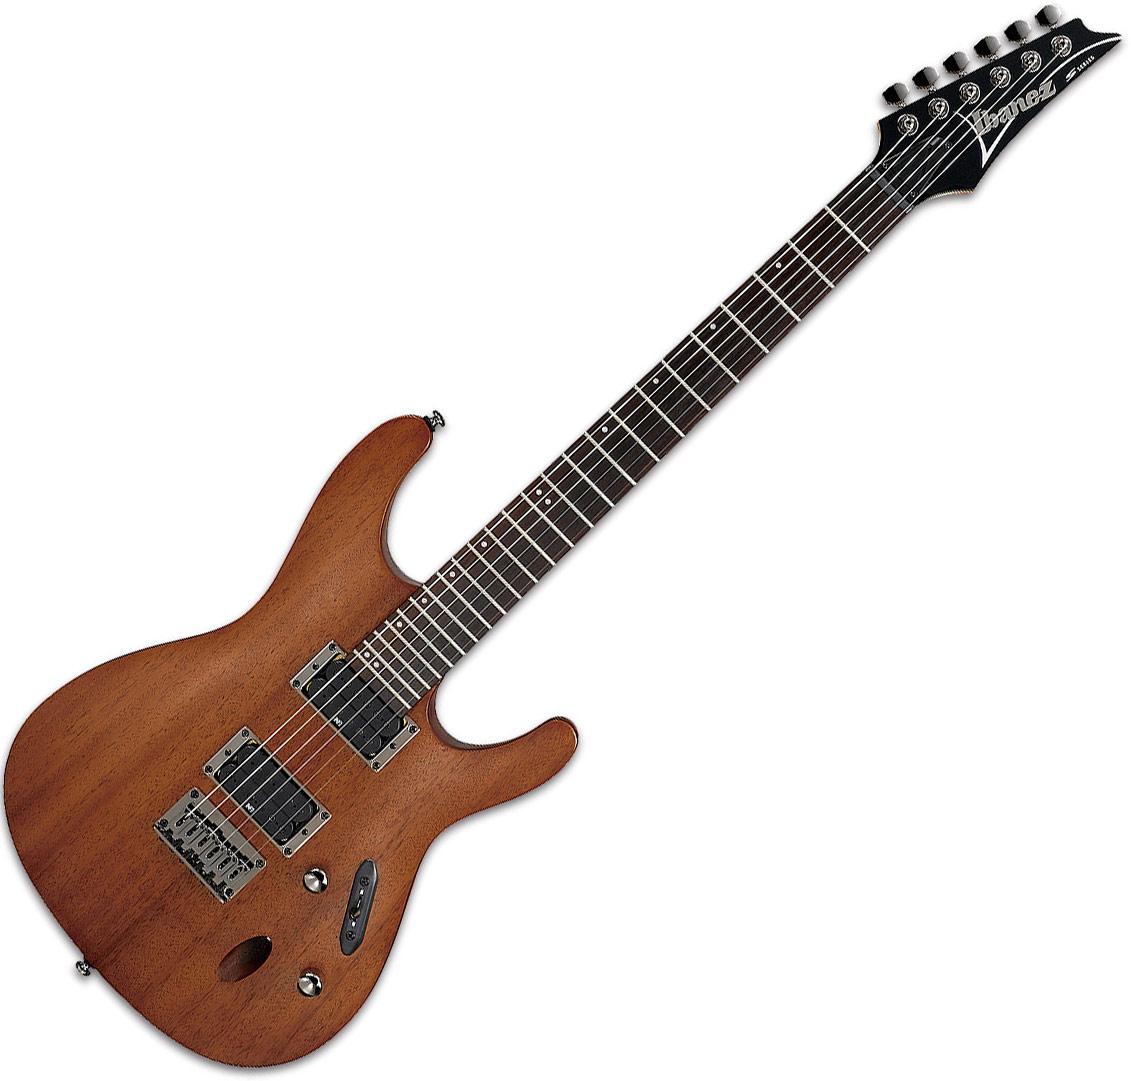 Ibañez - Guitarra Eléctirca S, Color: Caoba Mate Mod.S521-MOL_46